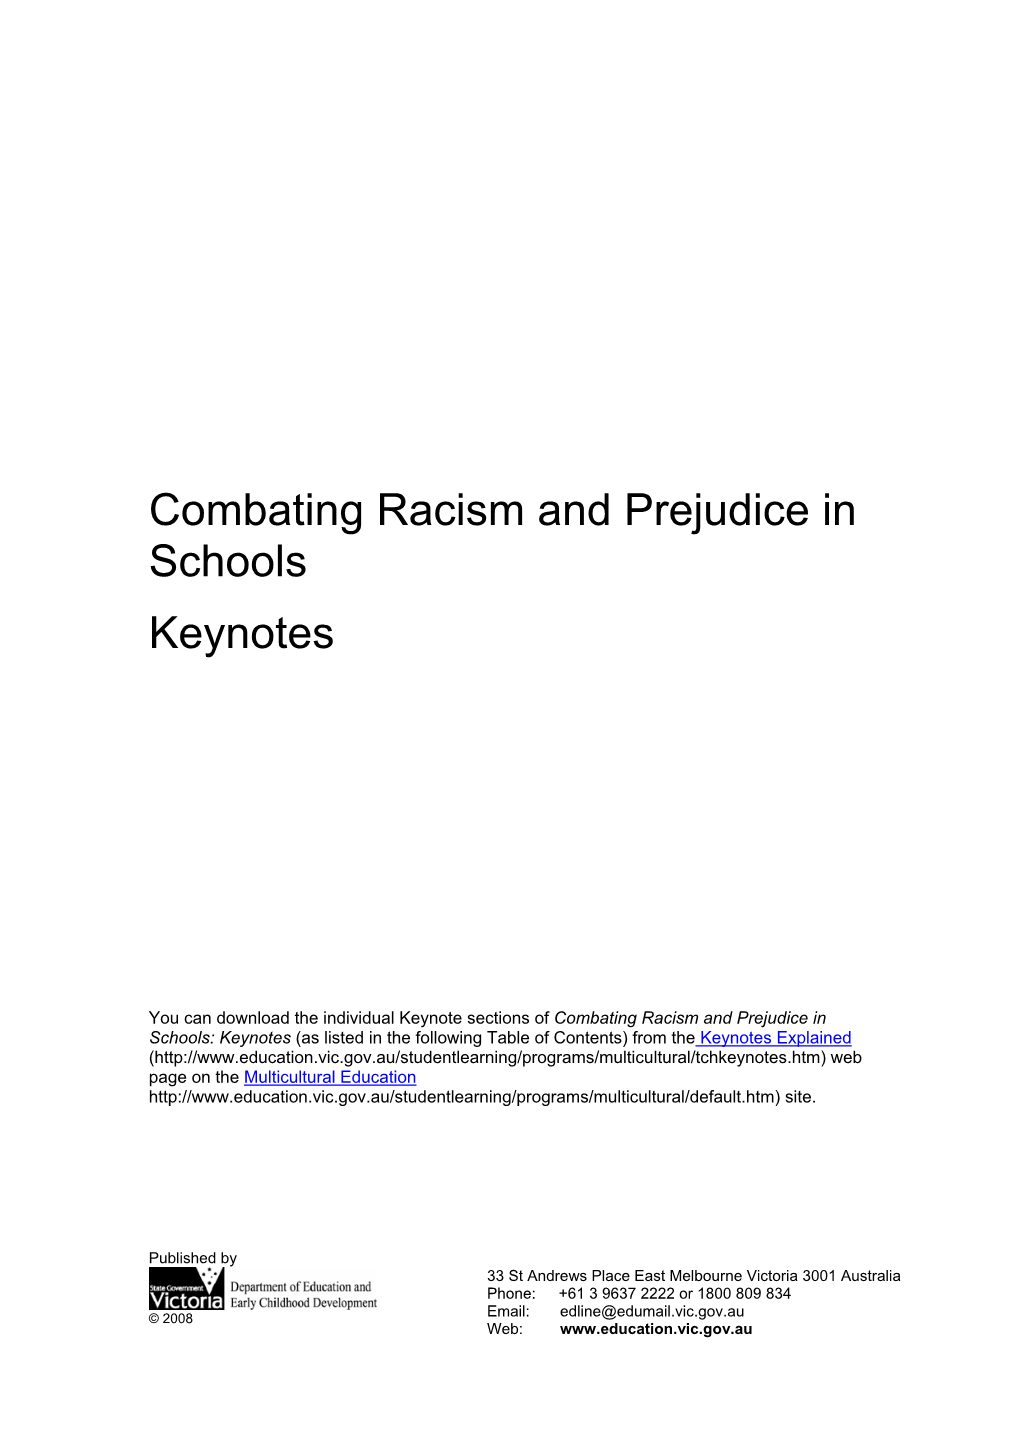 Combating Racism and Prejudice in Schools Keynotes